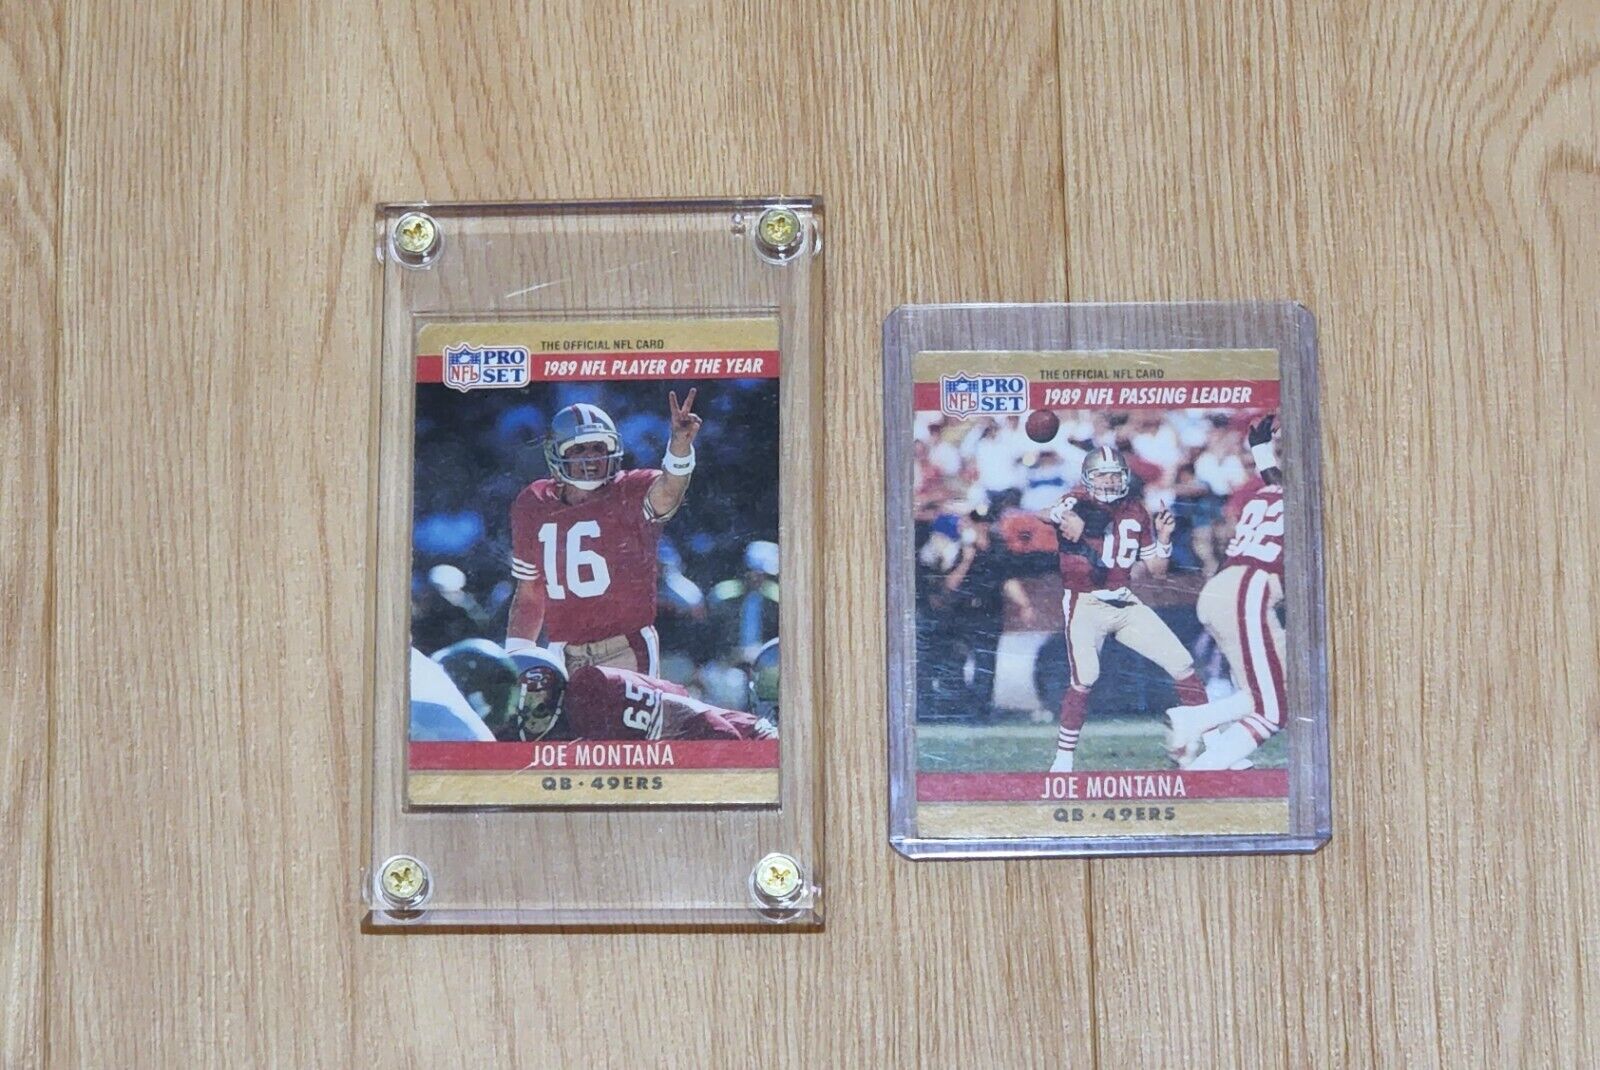 1990 Pro Set Joe Montana 49ers Error Card #2 in a Set of 2 cards